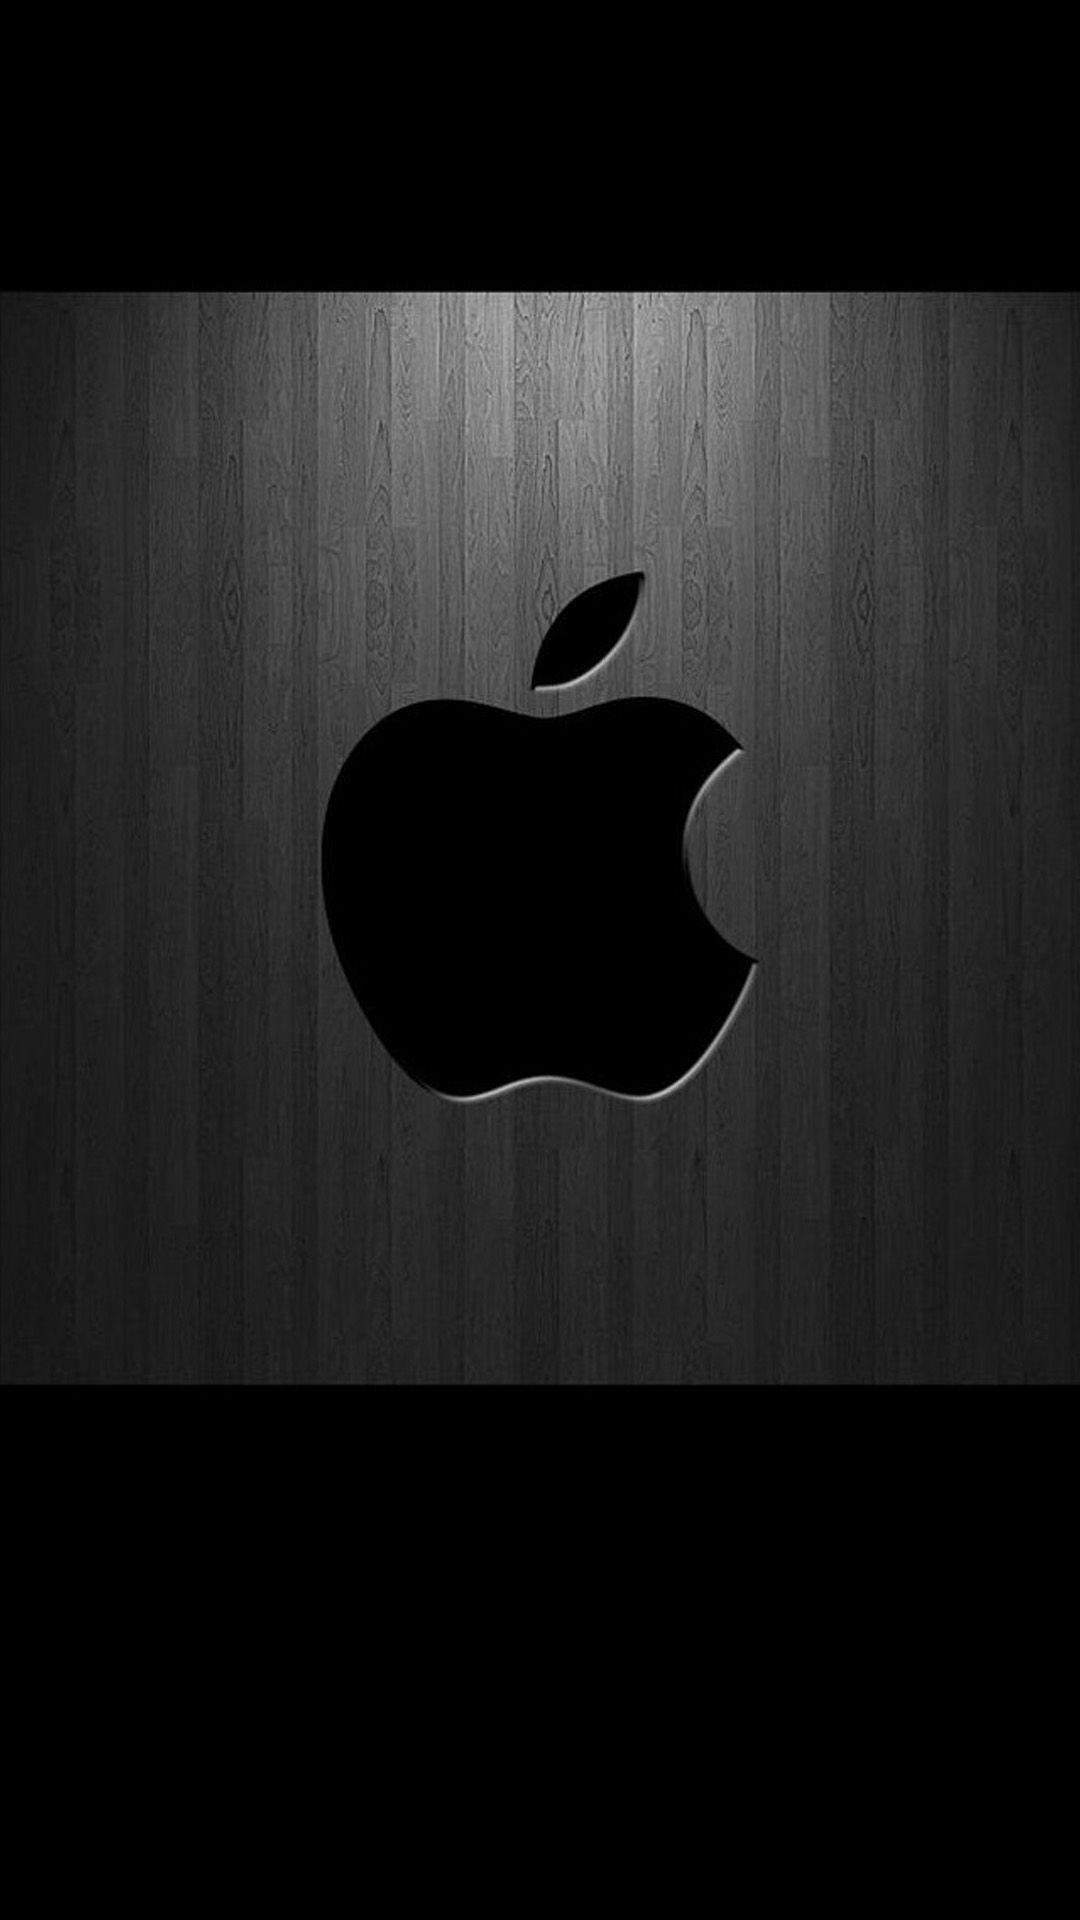 On Black Background iPhone Logo - Download Free Apple Logo Background for Iphone | PixelsTalk.Net